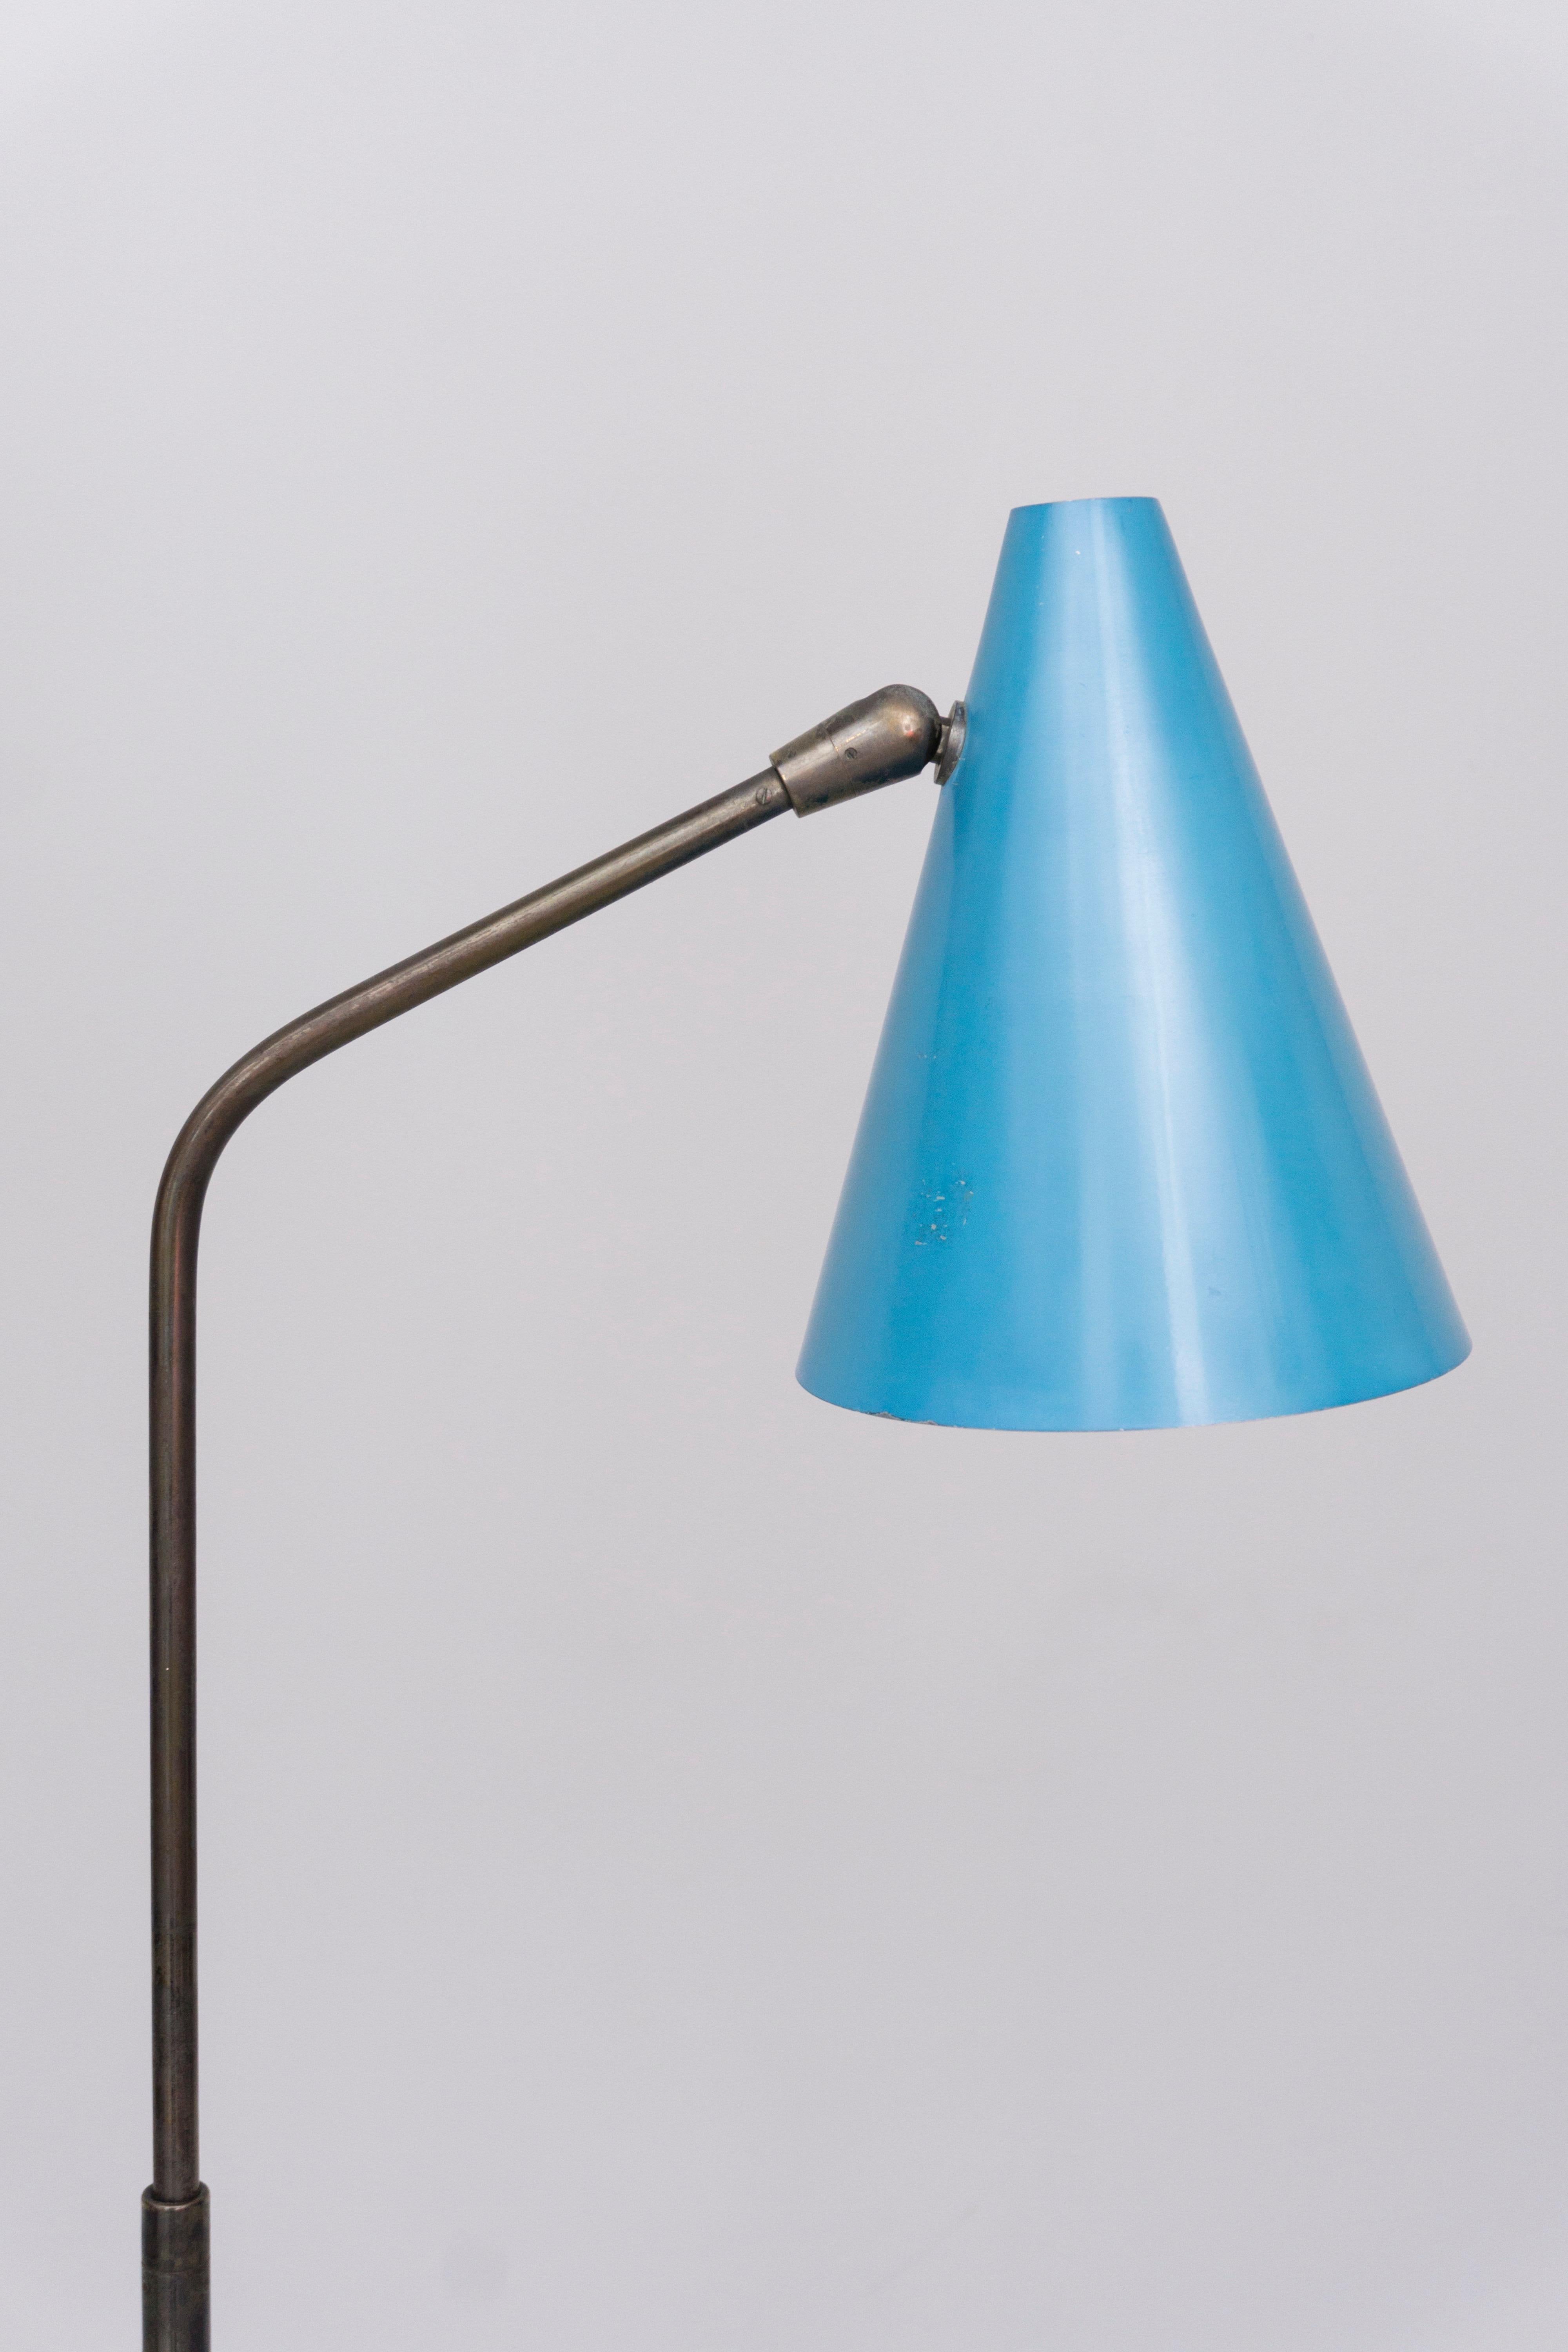 Italian Adjustable Floor Lamp, Brass, Aluminum by Giuseppe Ostuni / O-Luce, 1955 For Sale